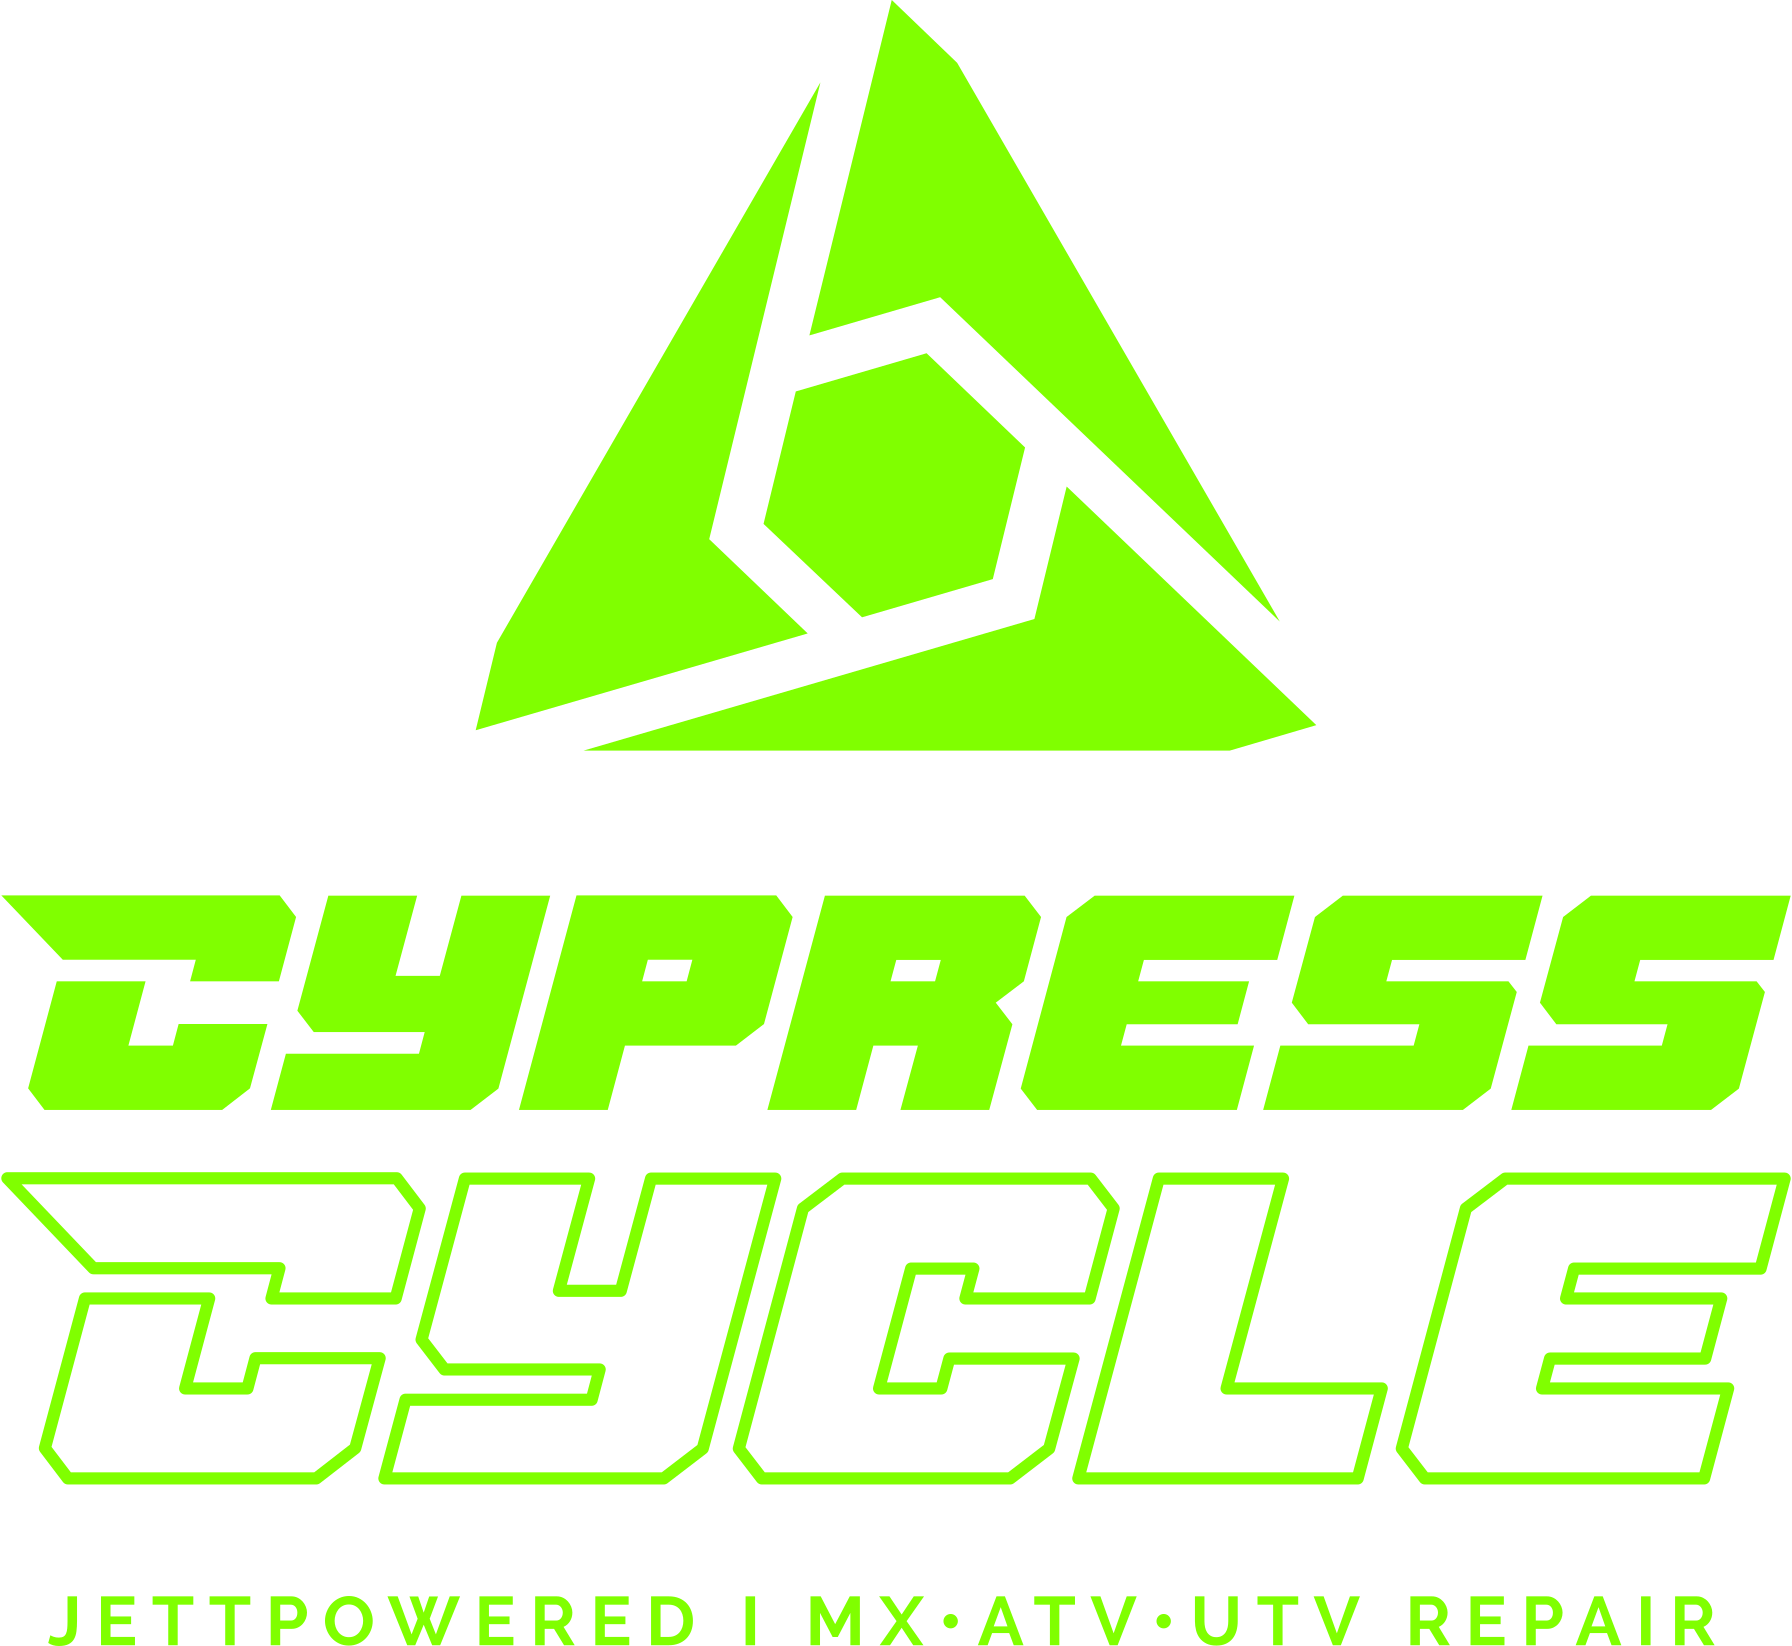 Cypress Cycle